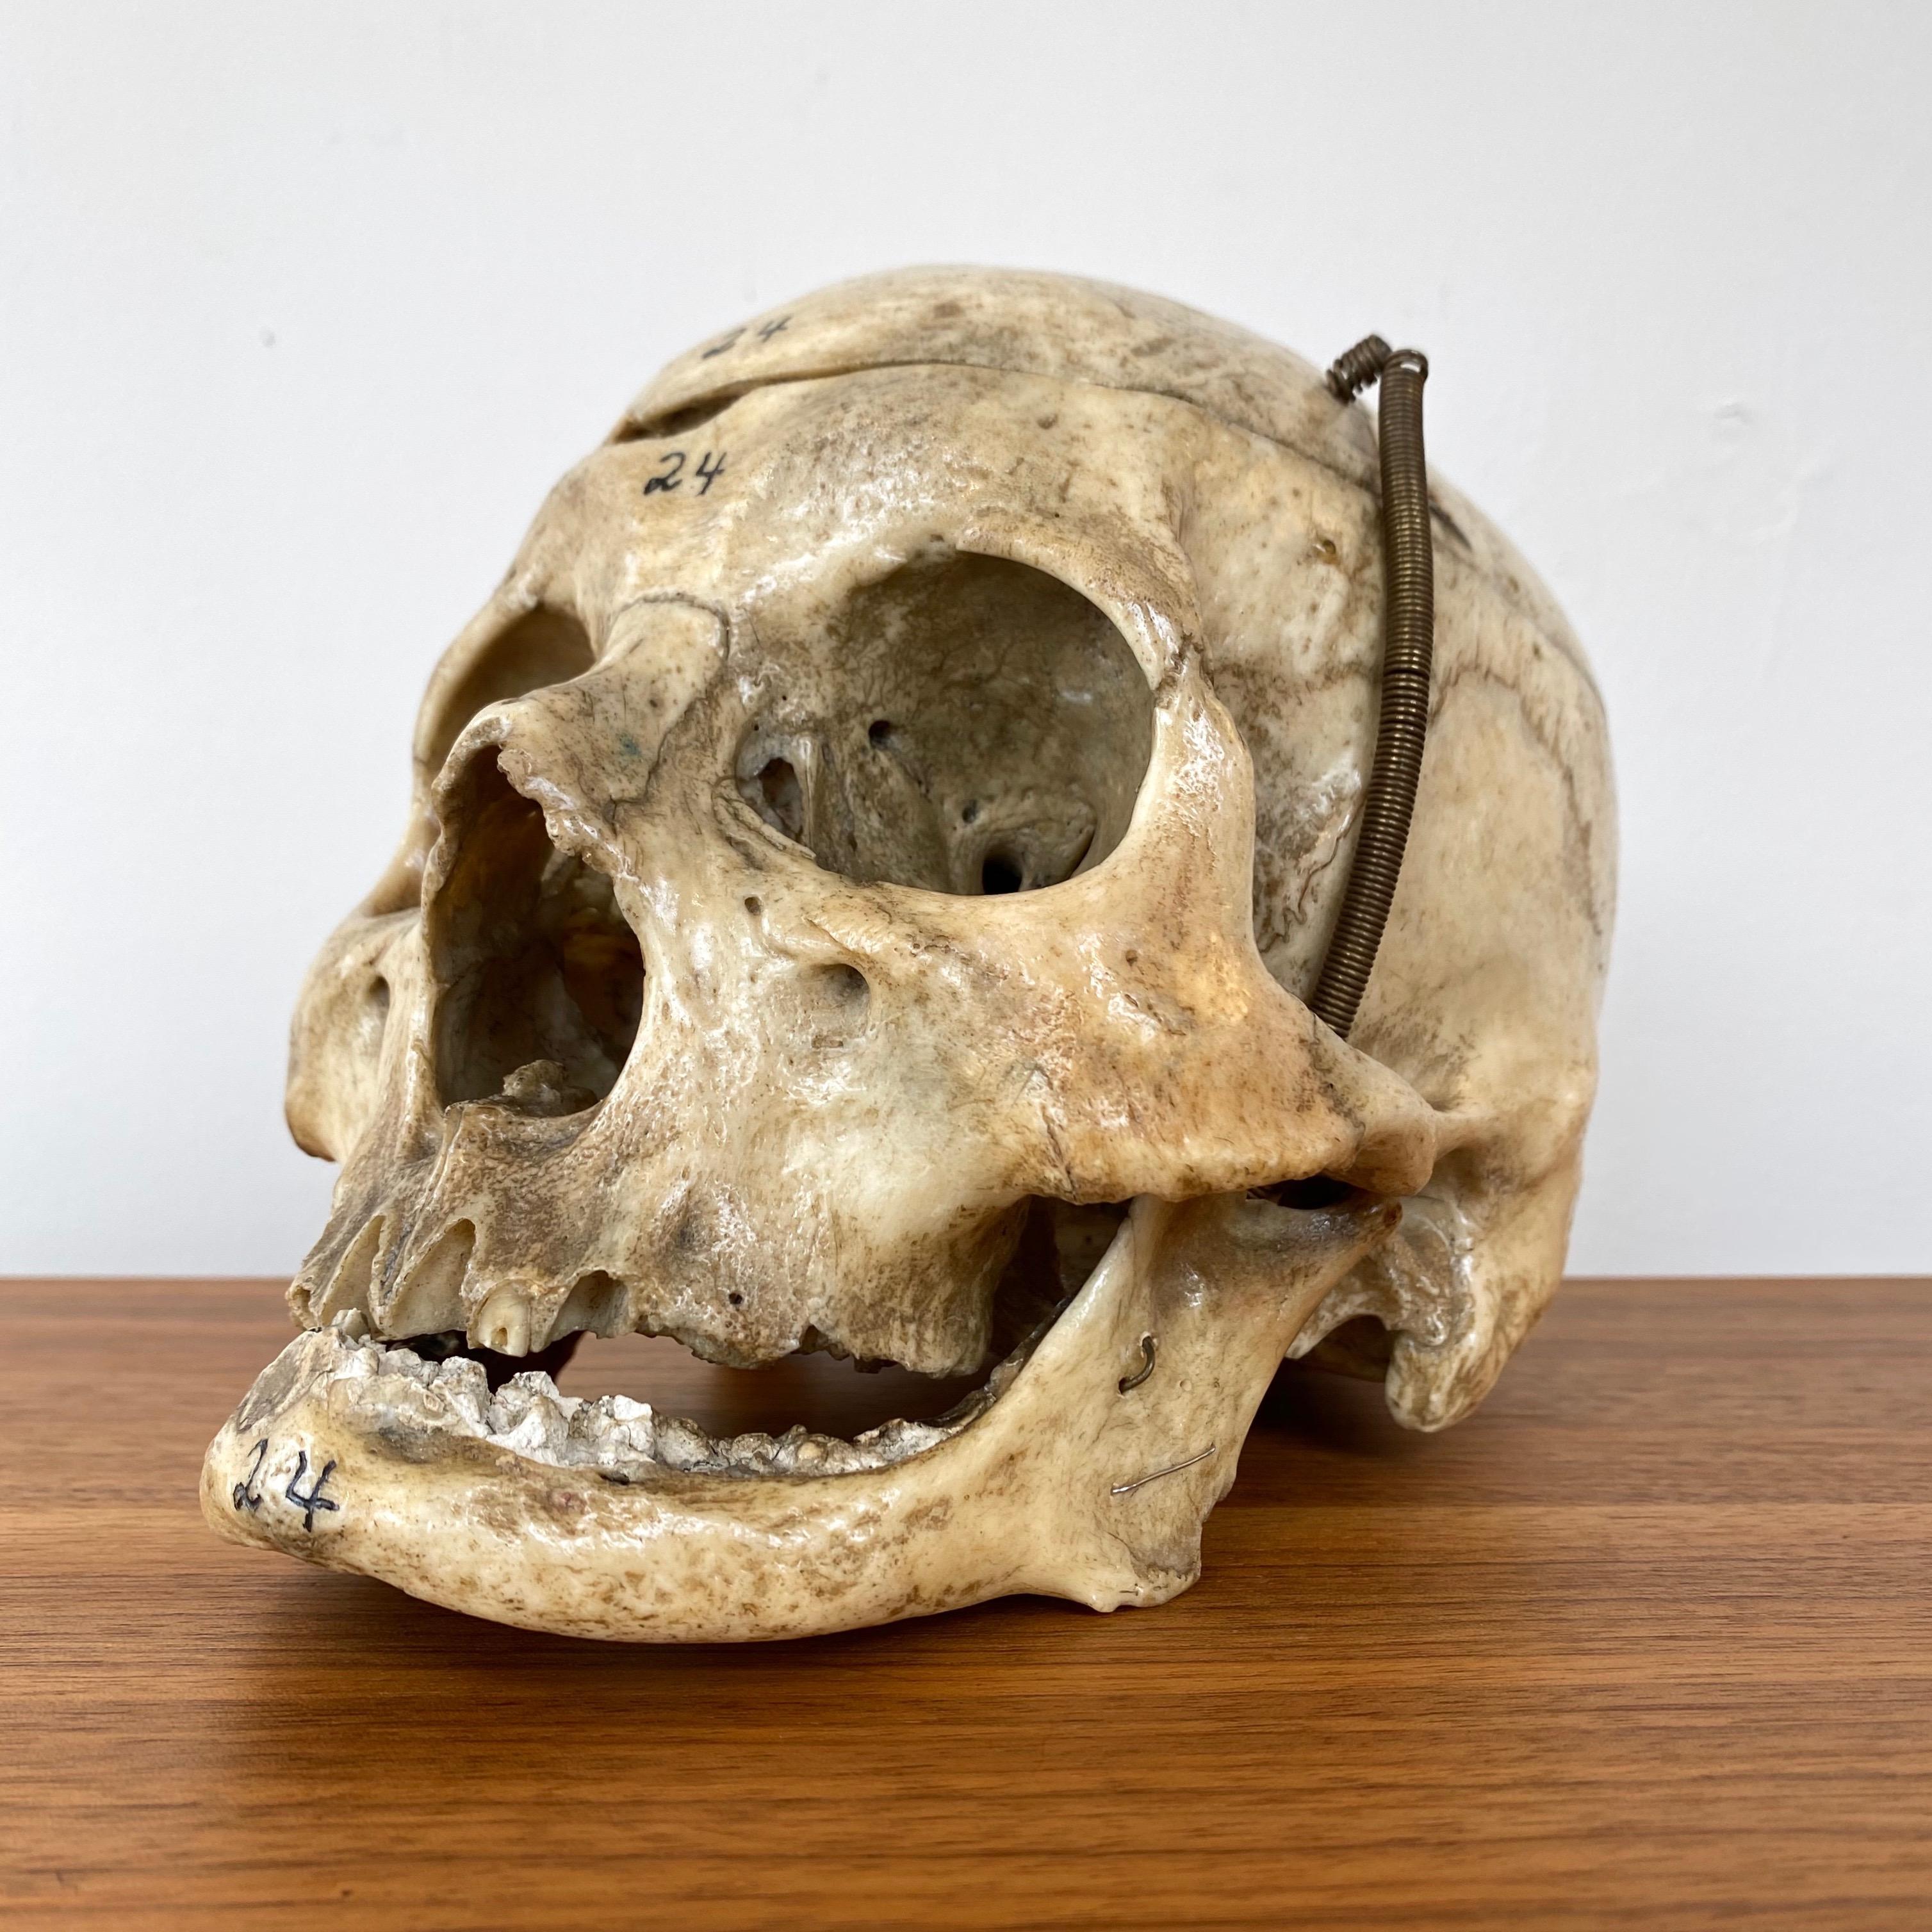 human skull for sale